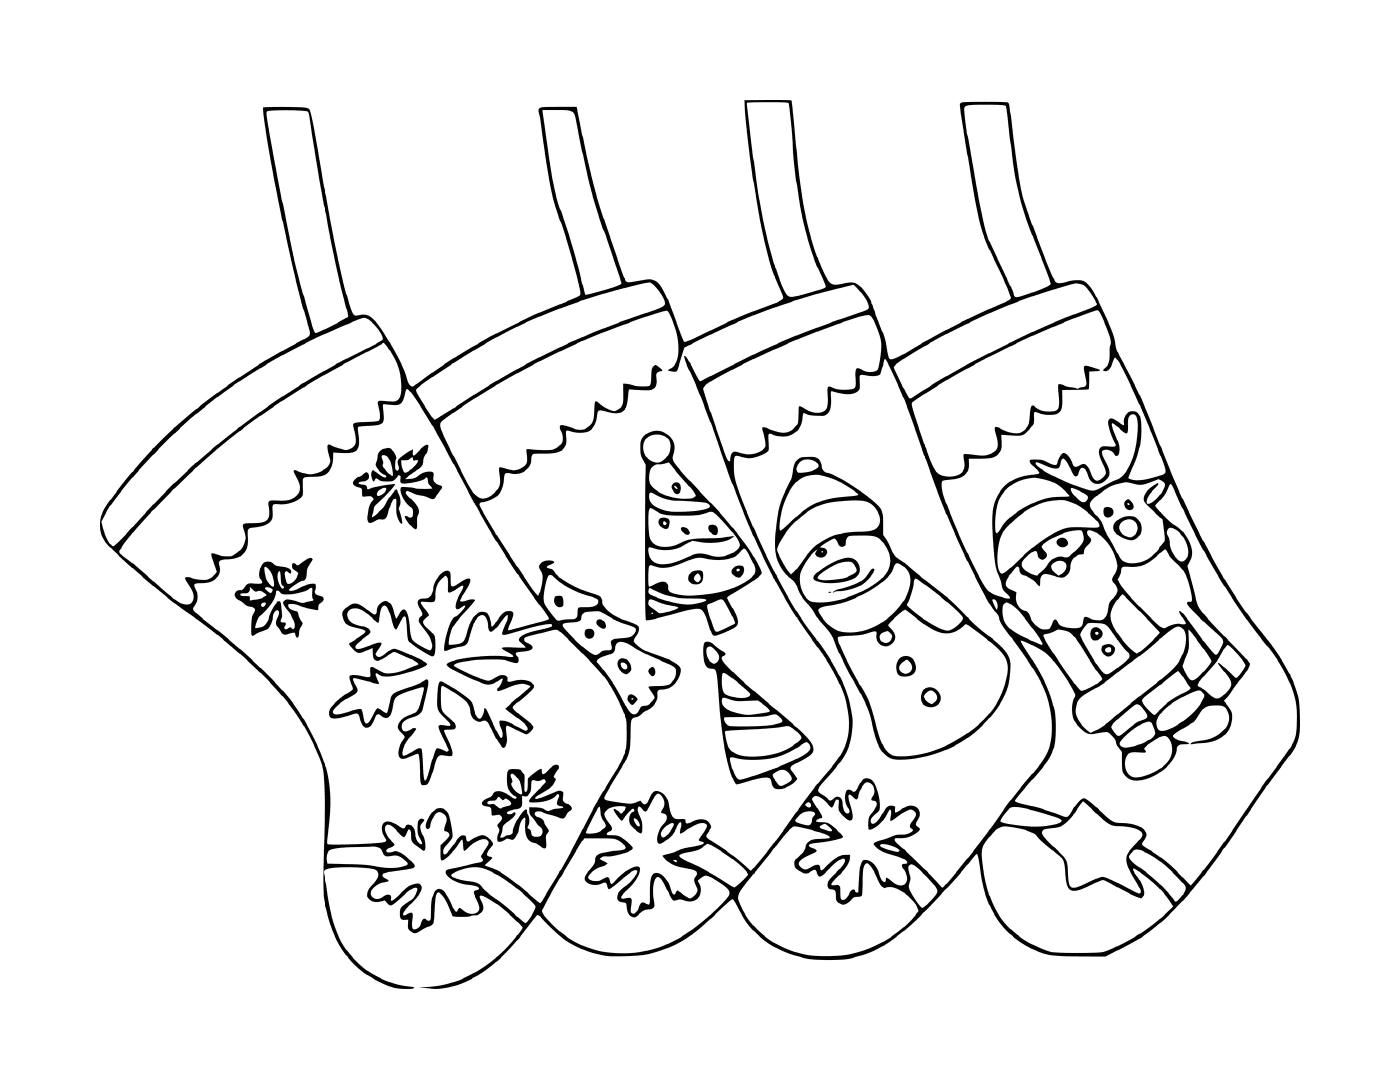  Four beautiful Christmas stockings near the home 